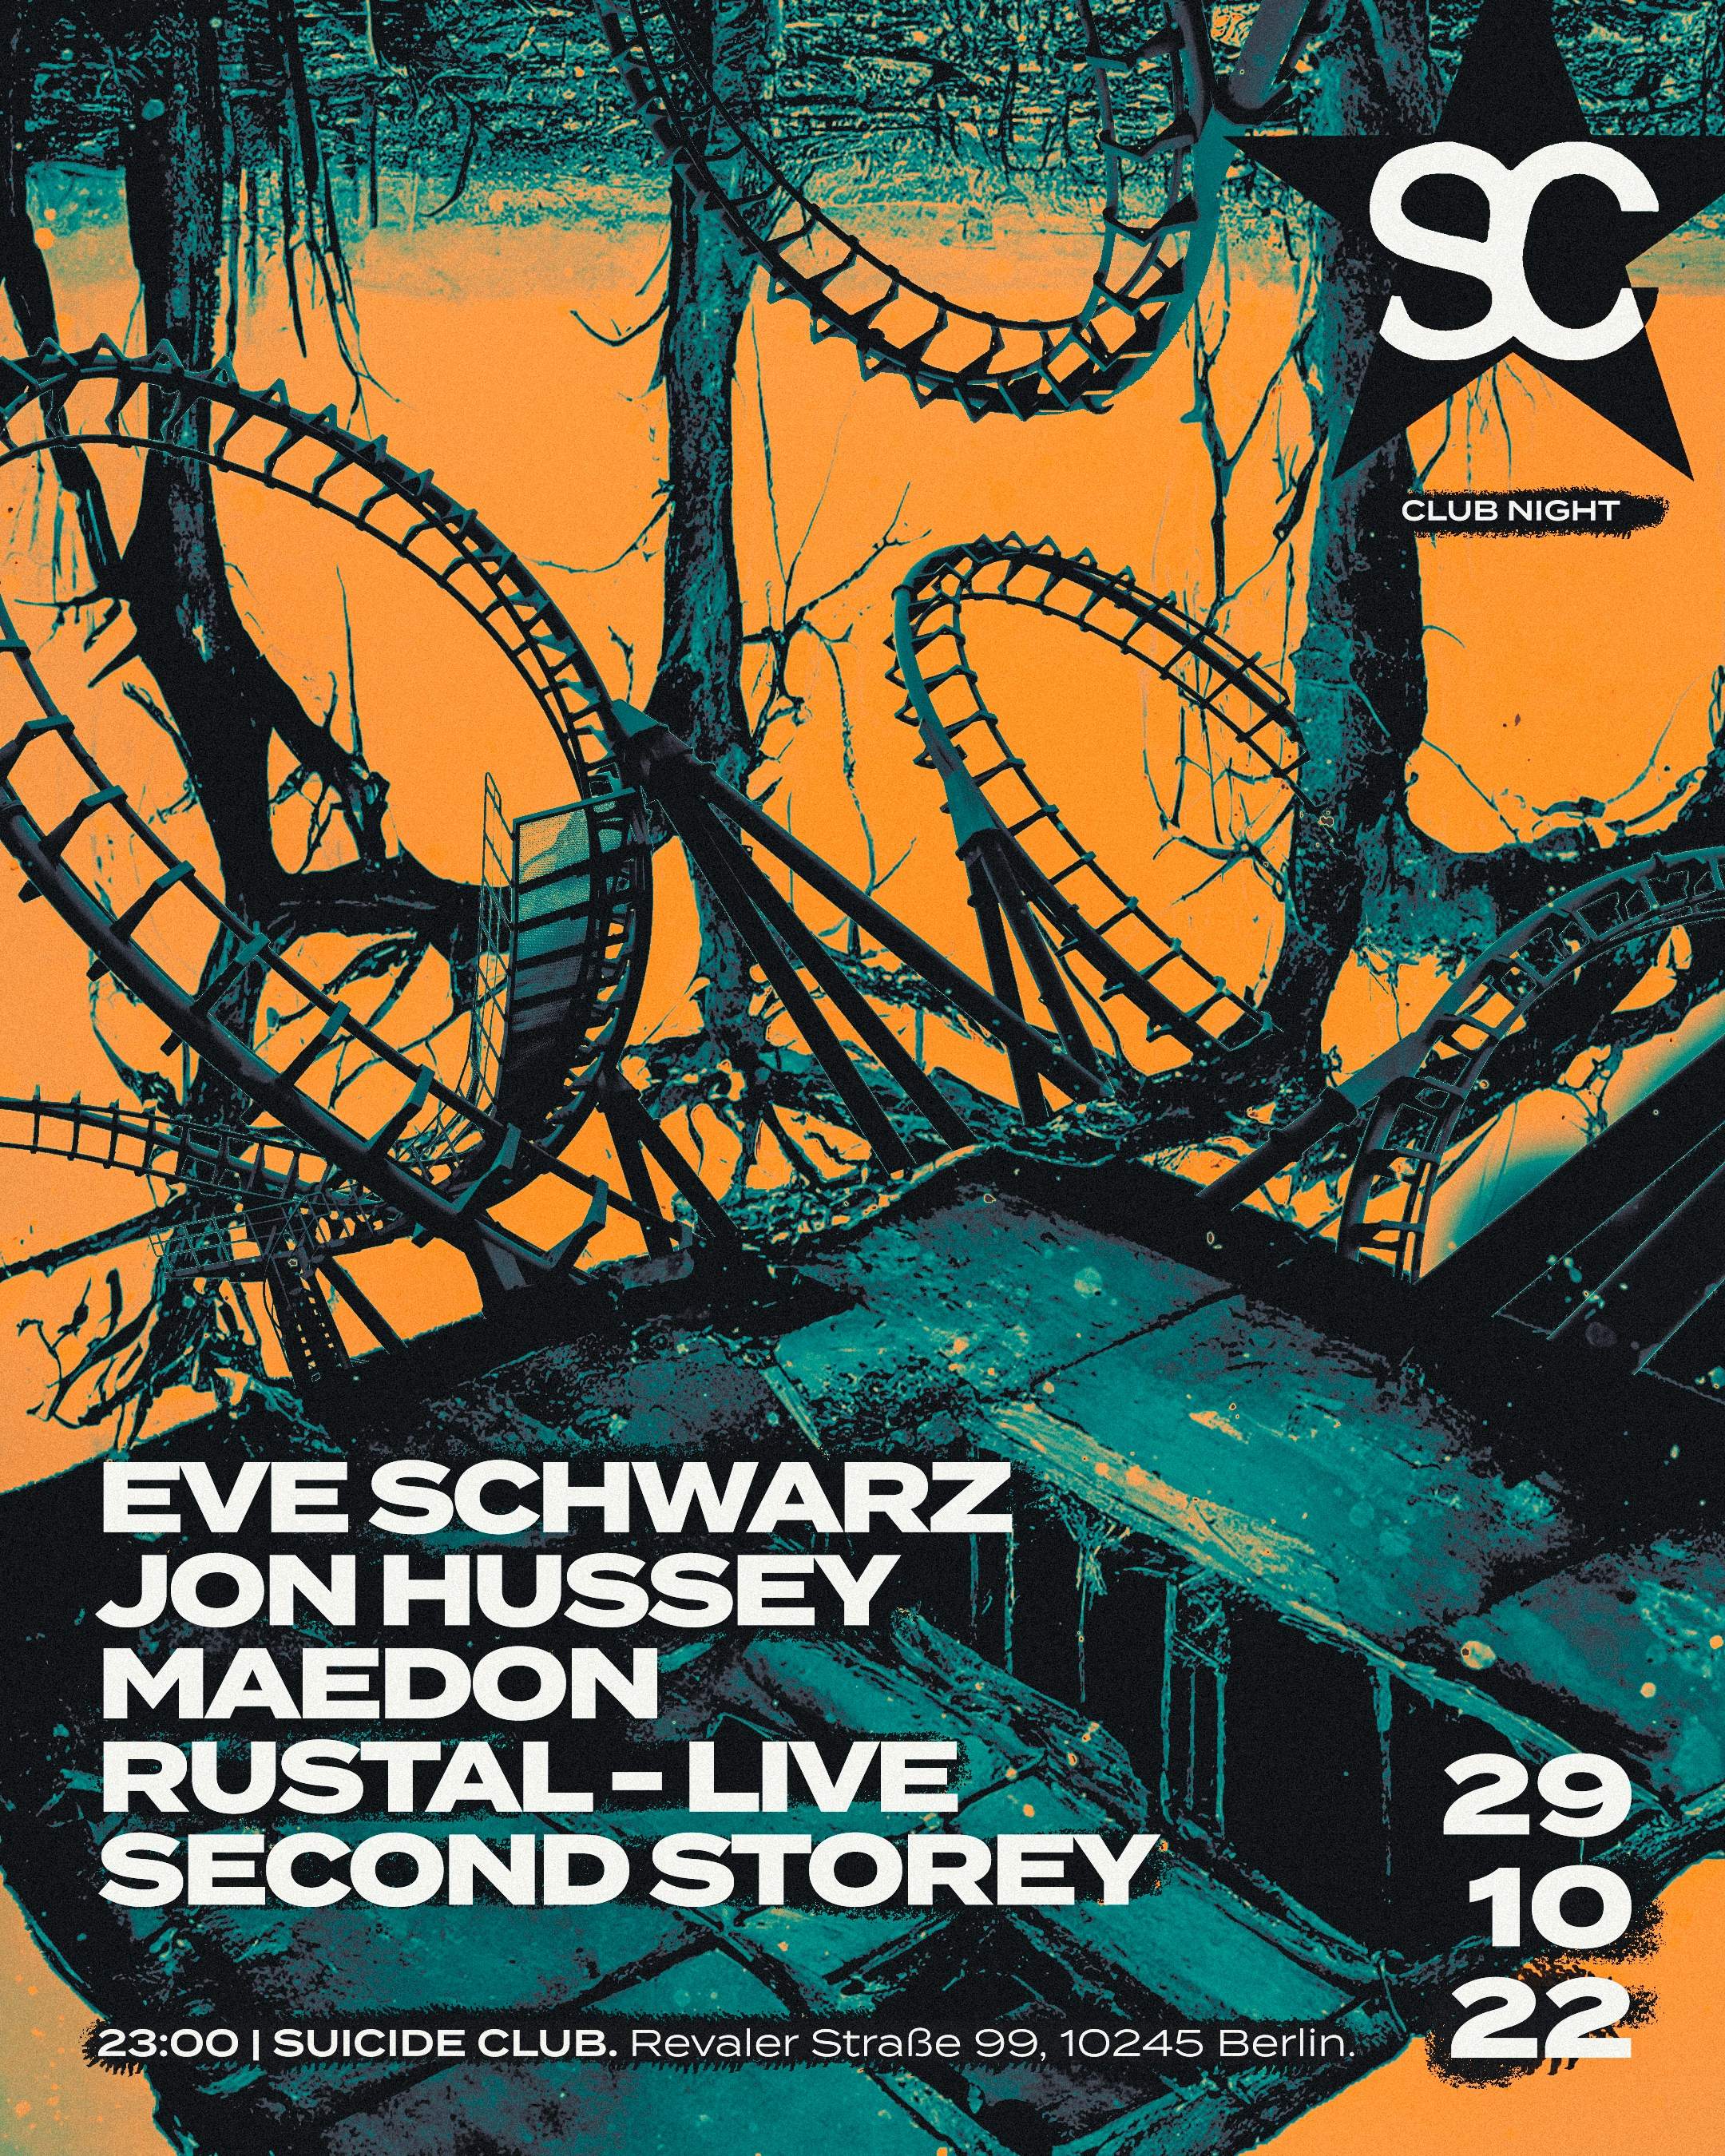 SCB || CLUB NIGHT w/ MAEDON, Rustal live, Jon Hussey, Second Storey and Eve Schwarz - Página trasera